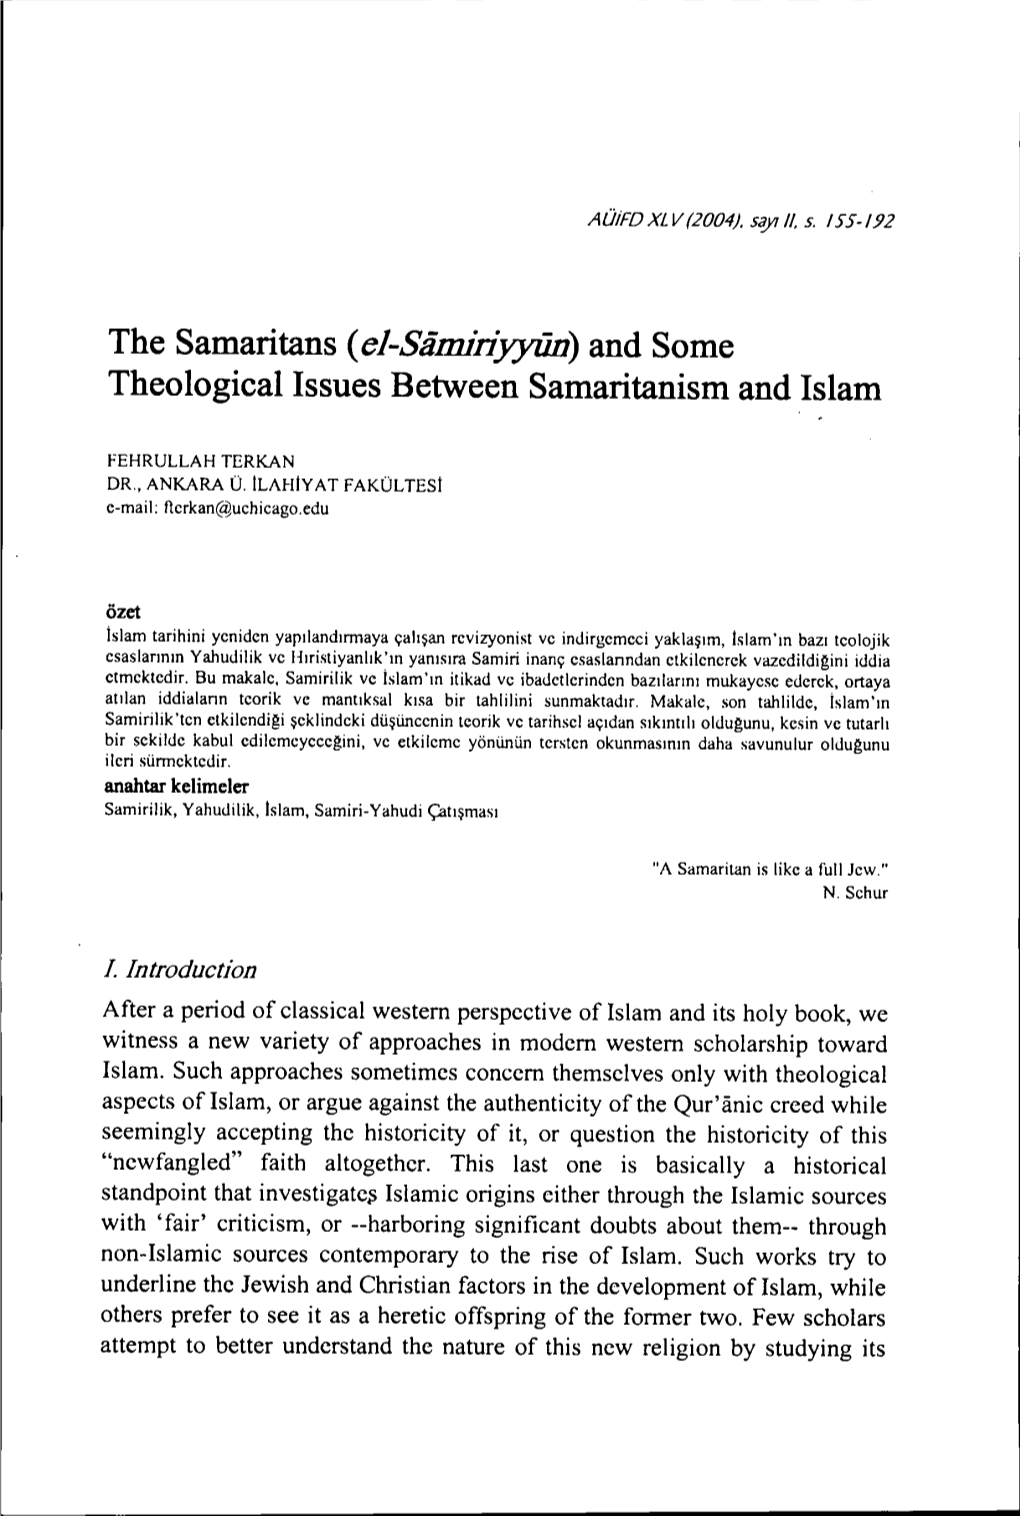 The Samaritans (El-Samiriyyün) and Some Theological Issues Between Samaritanism Andislam